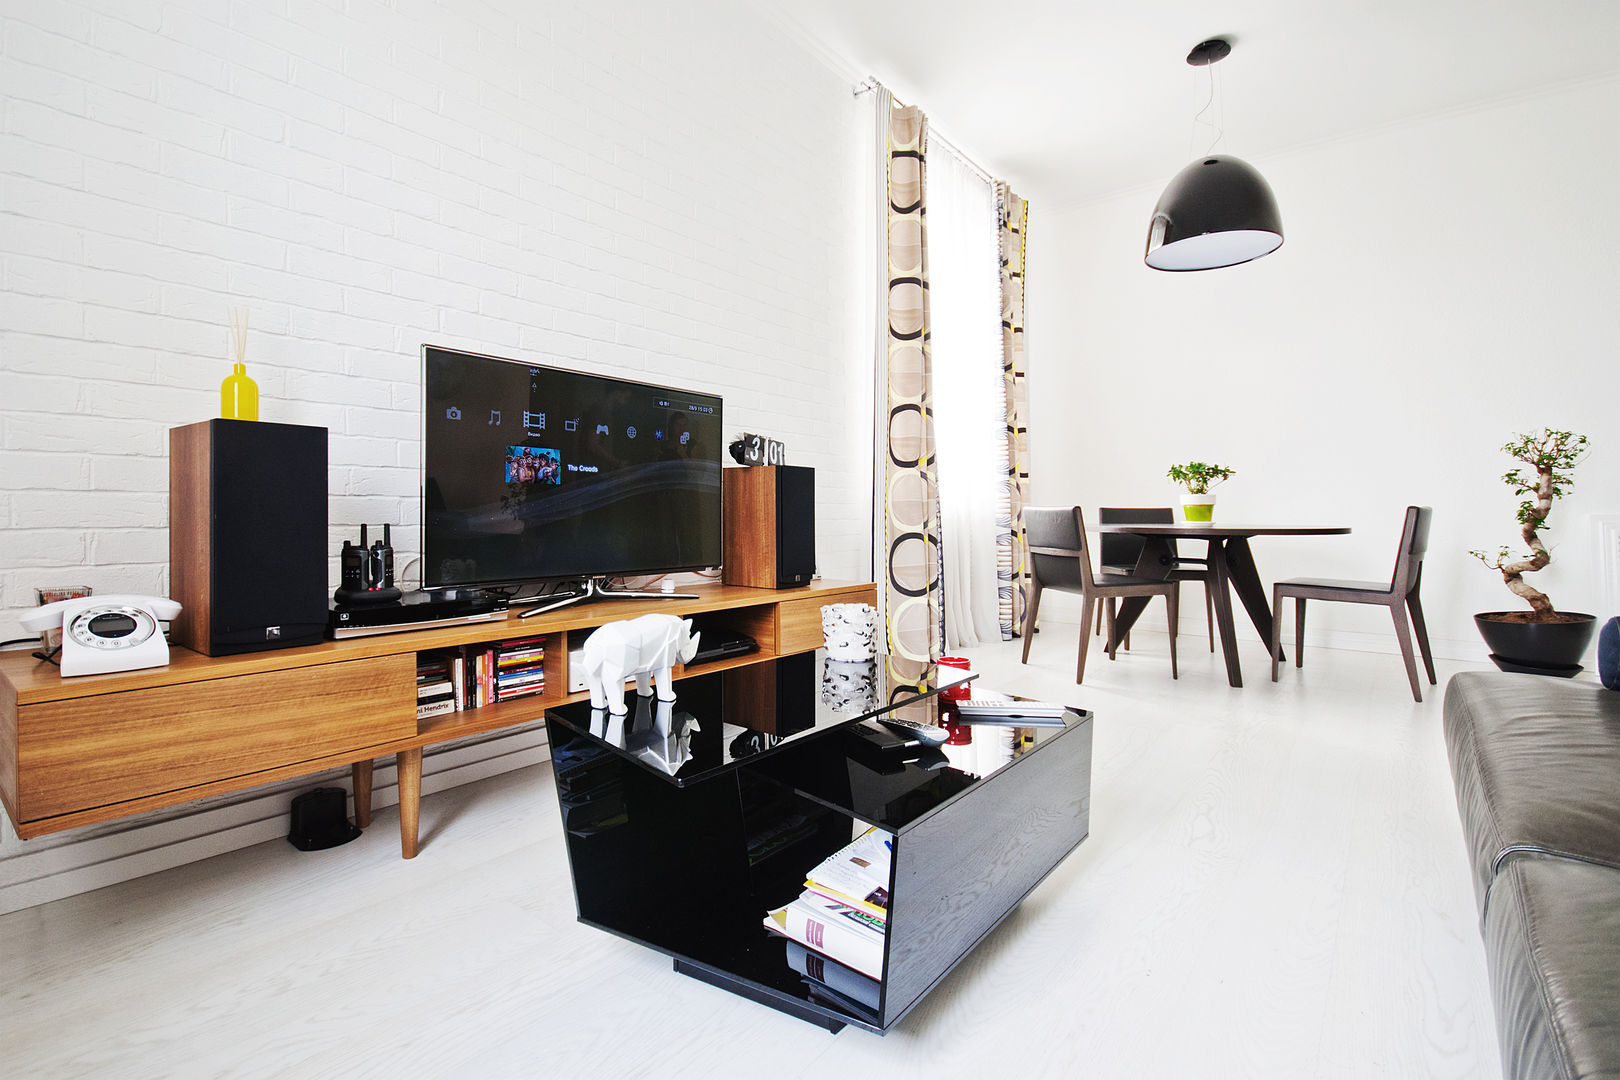 Квартира на Университетском, Owner /designer Owner /designer Industrial style living room